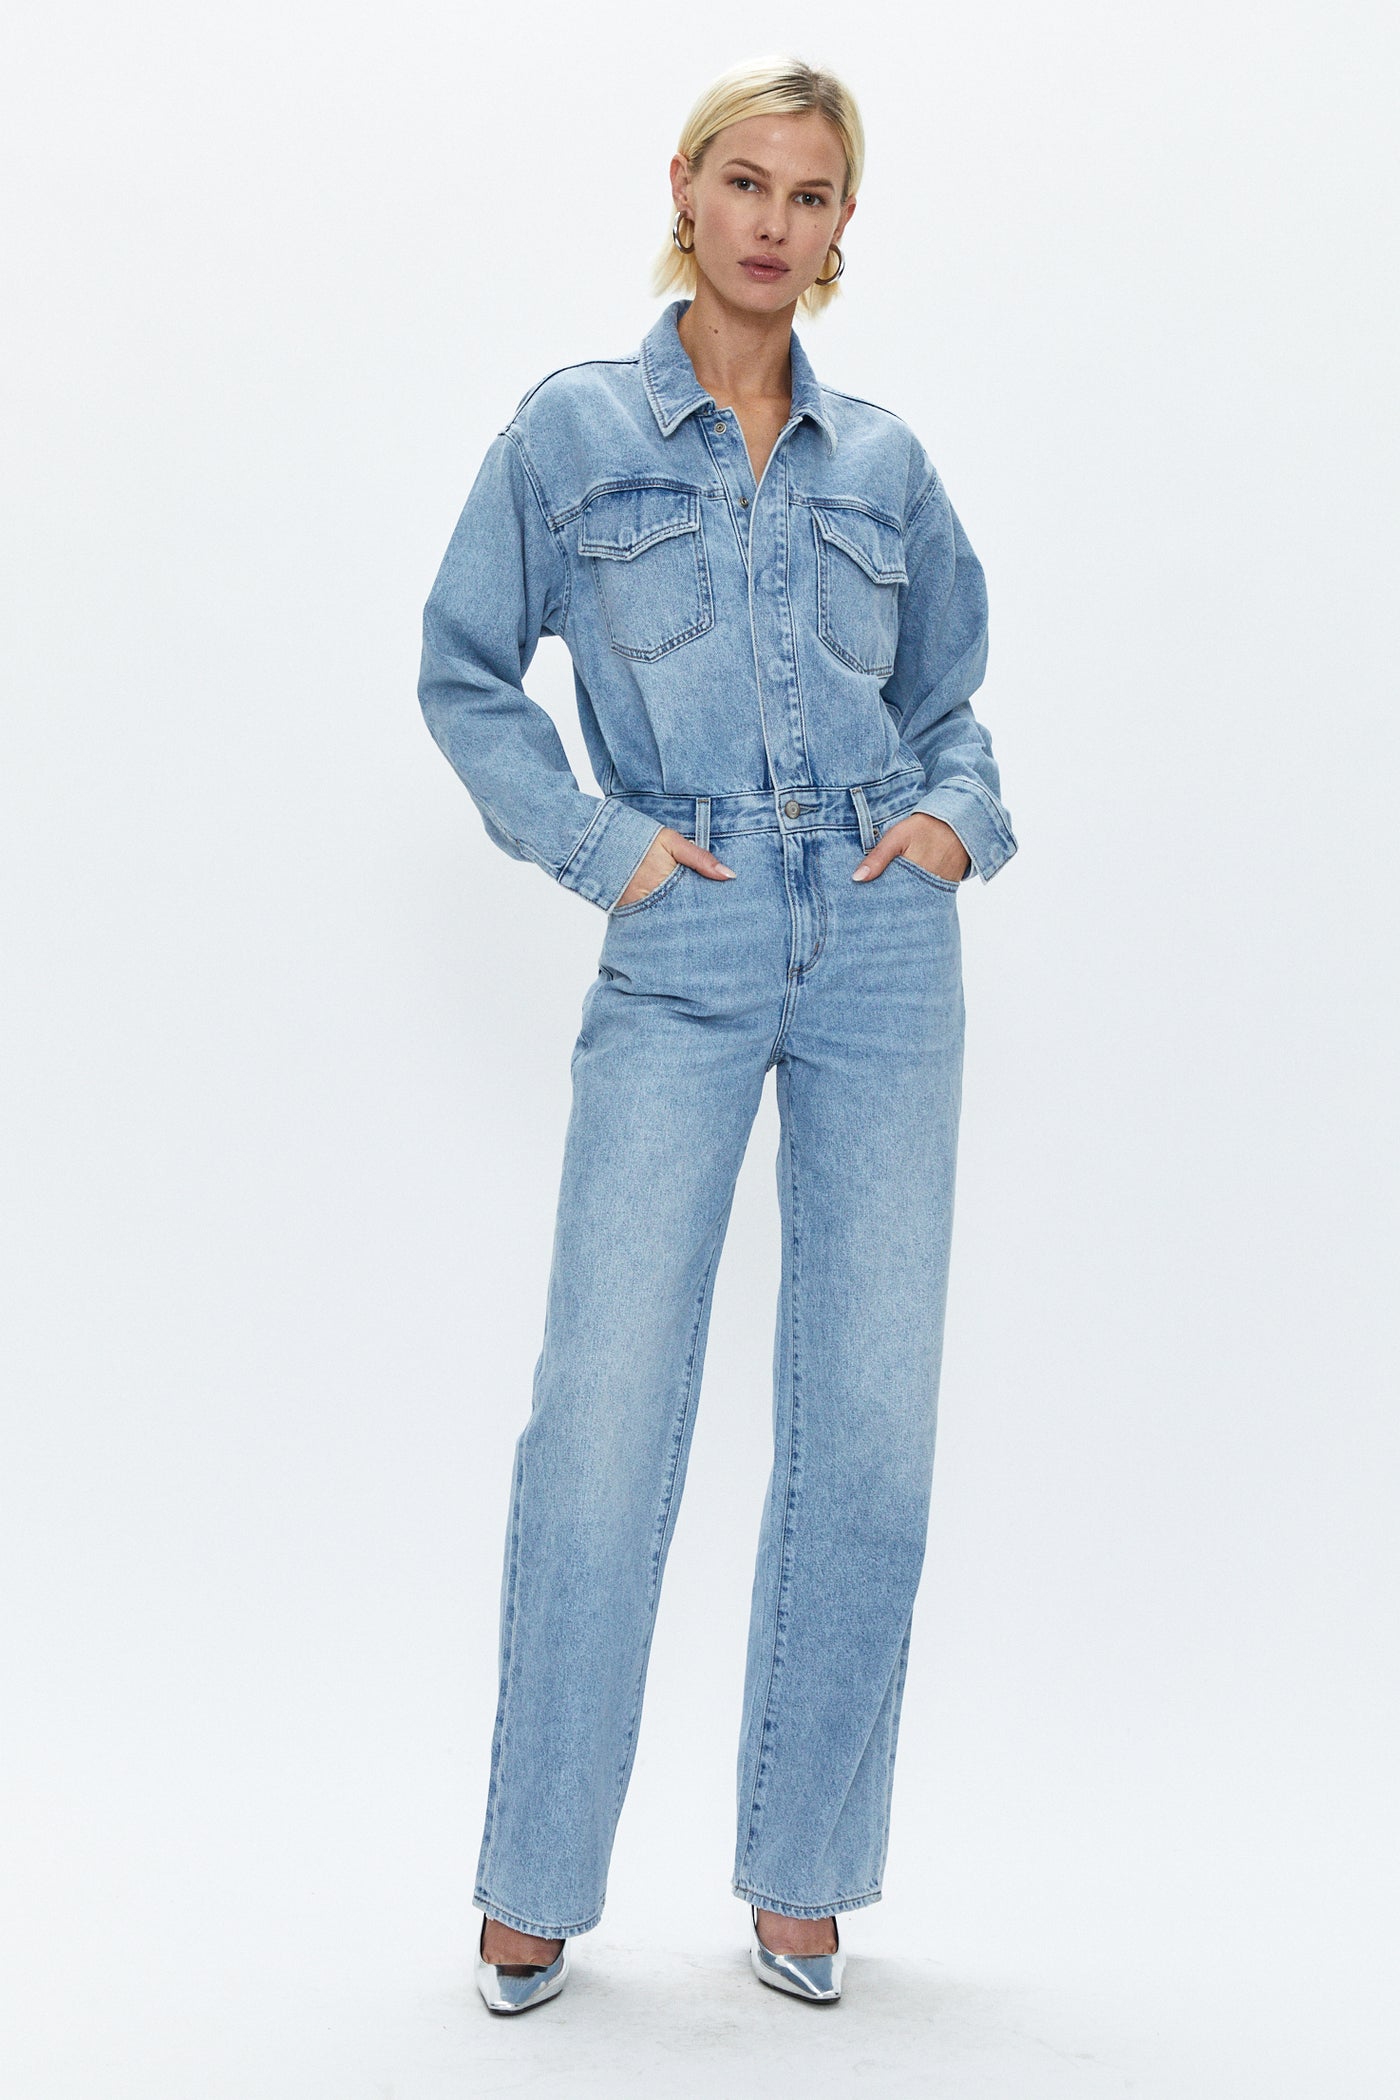 Buy Fashionoliq Women Ladies Baggy Denim Jeans Jumpsuit Full Length Trouser  Dungaree Playsuit (Large) Blue at Amazon.in